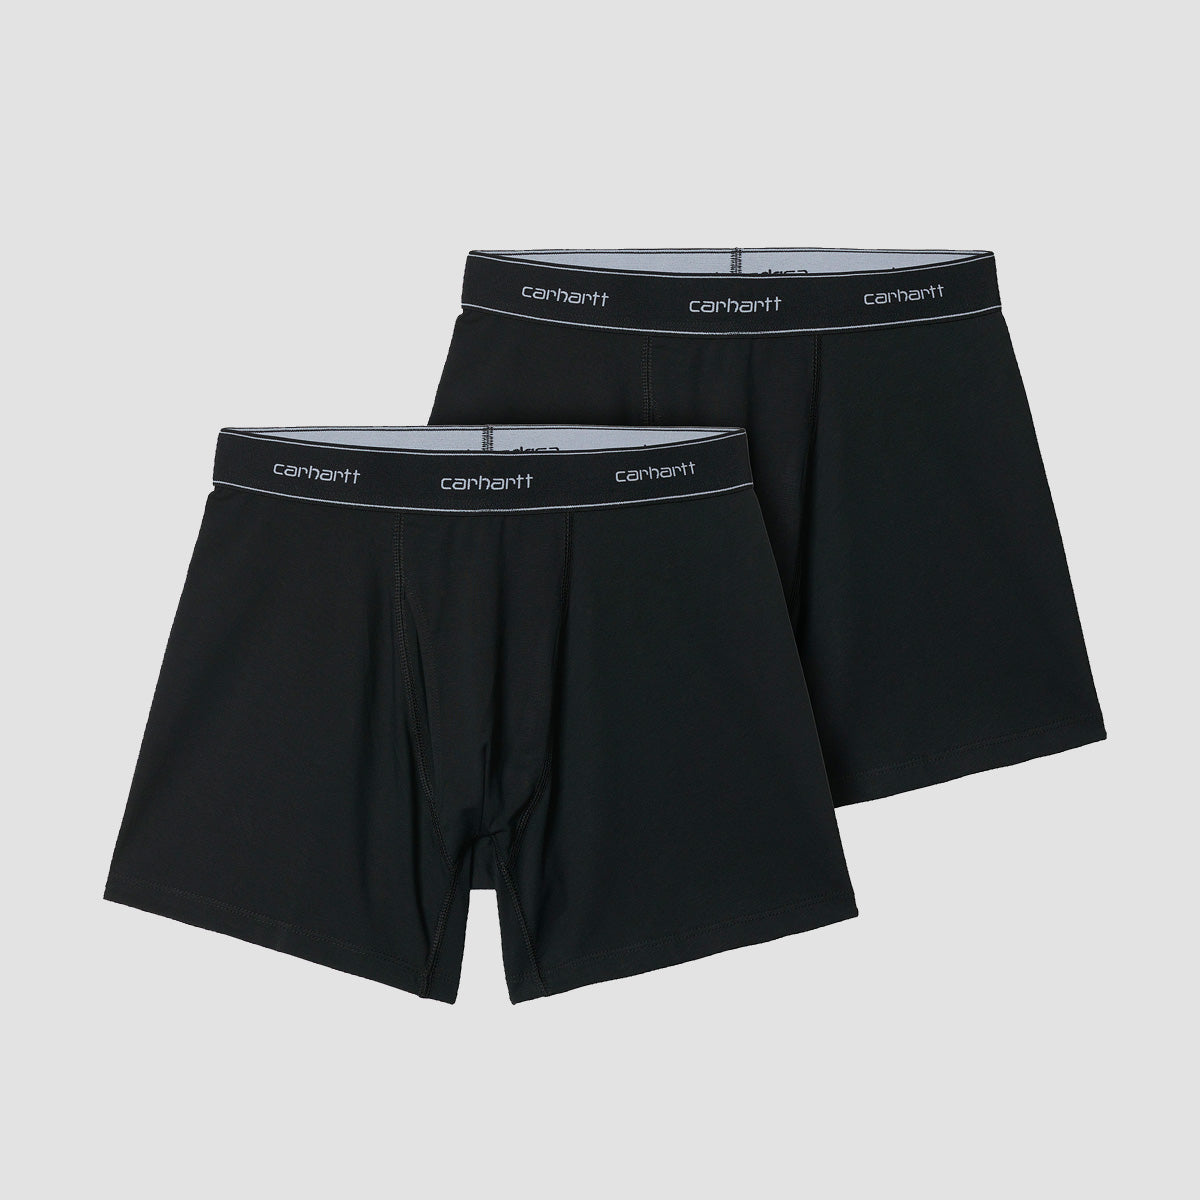 Carhartt WIP Cotton Trunks Boxer Shorts 2 Pack Black/Black